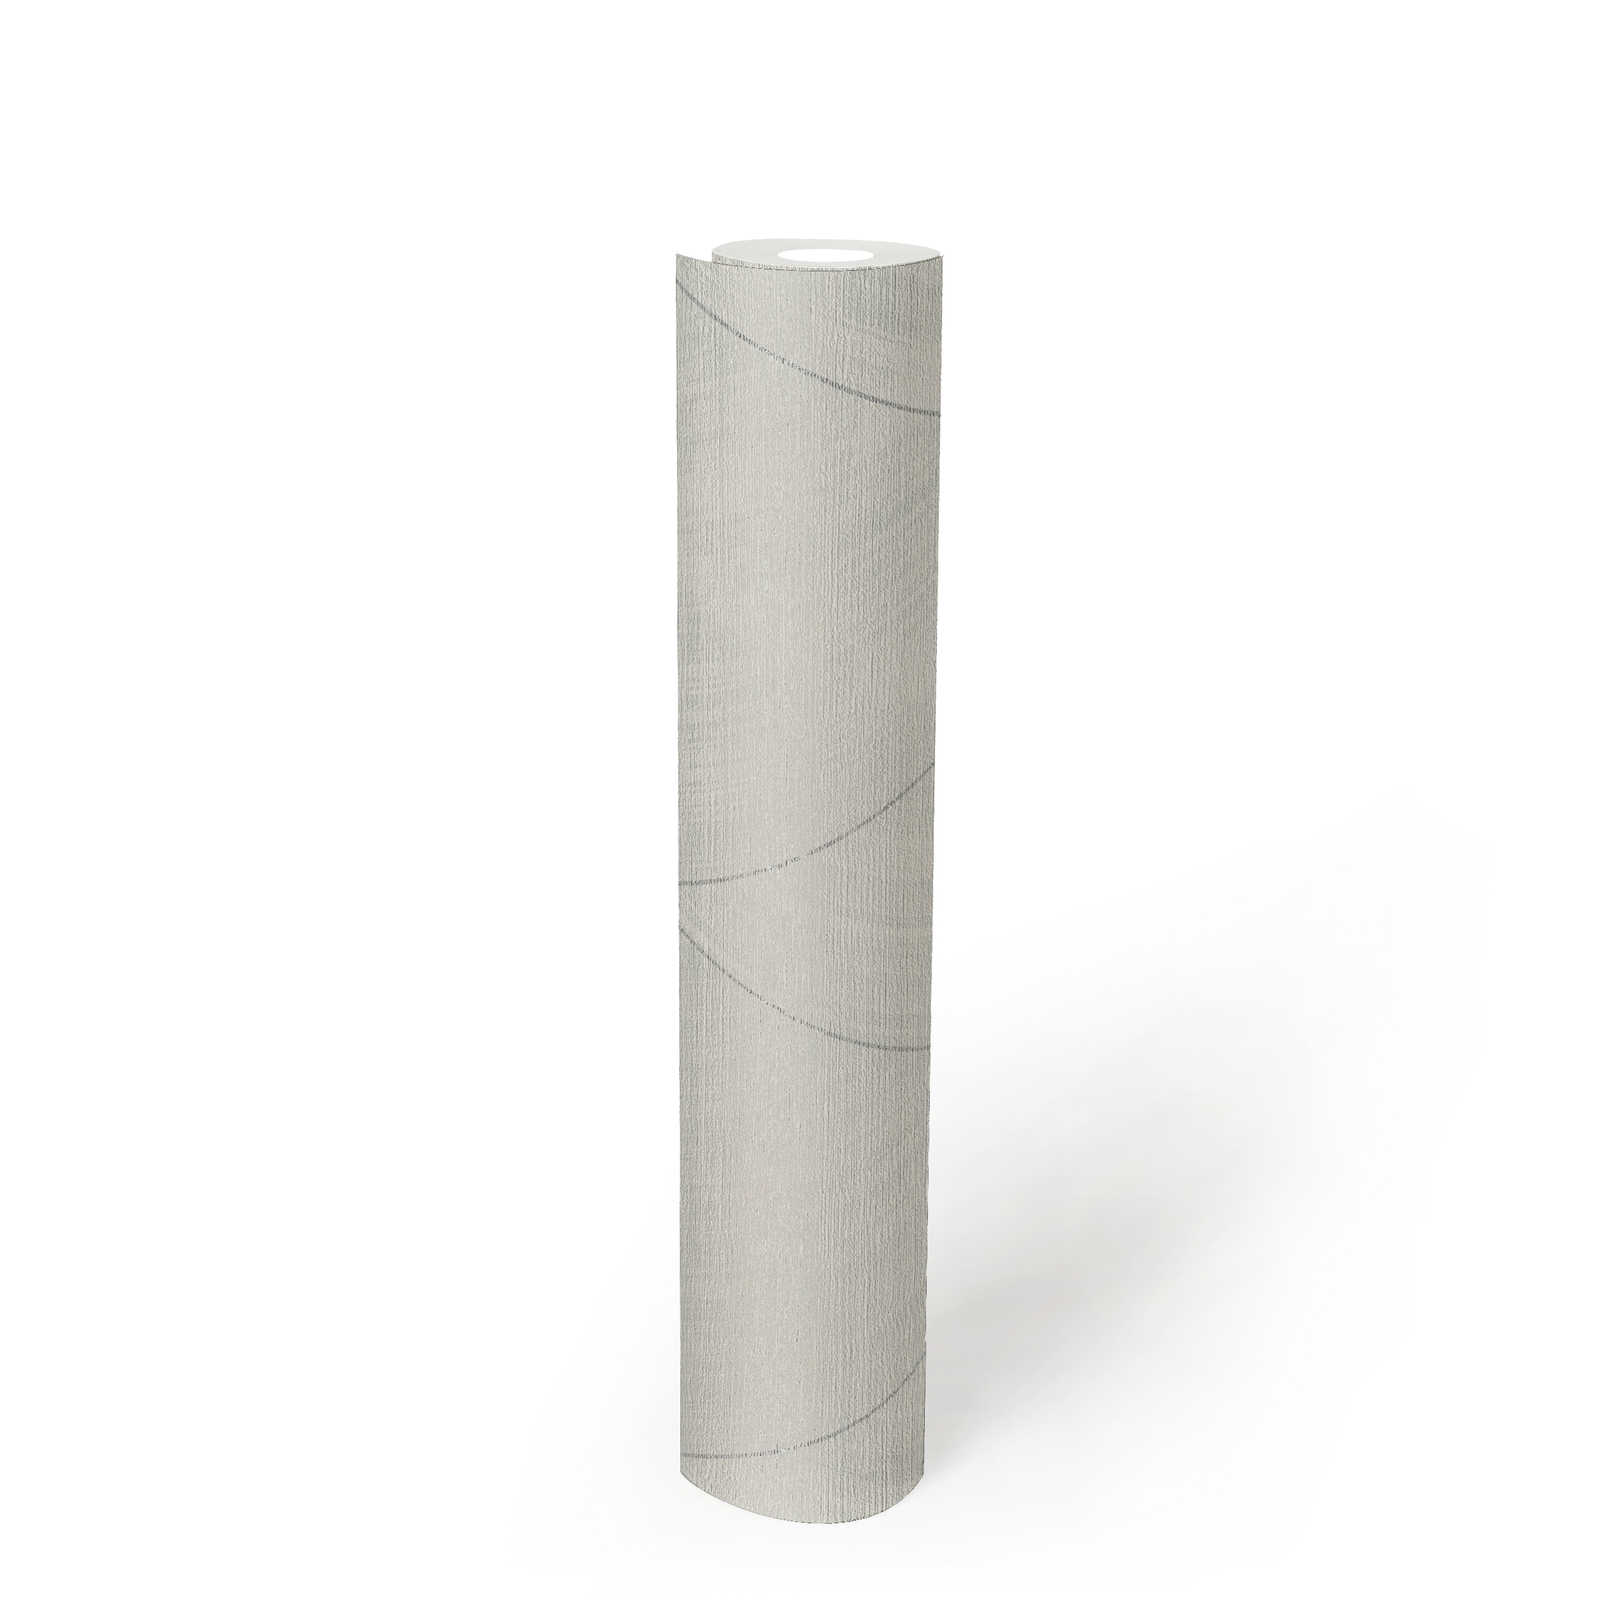             Textiloptik Tapete mit Rauten Muster – Metallic, Weiß
        